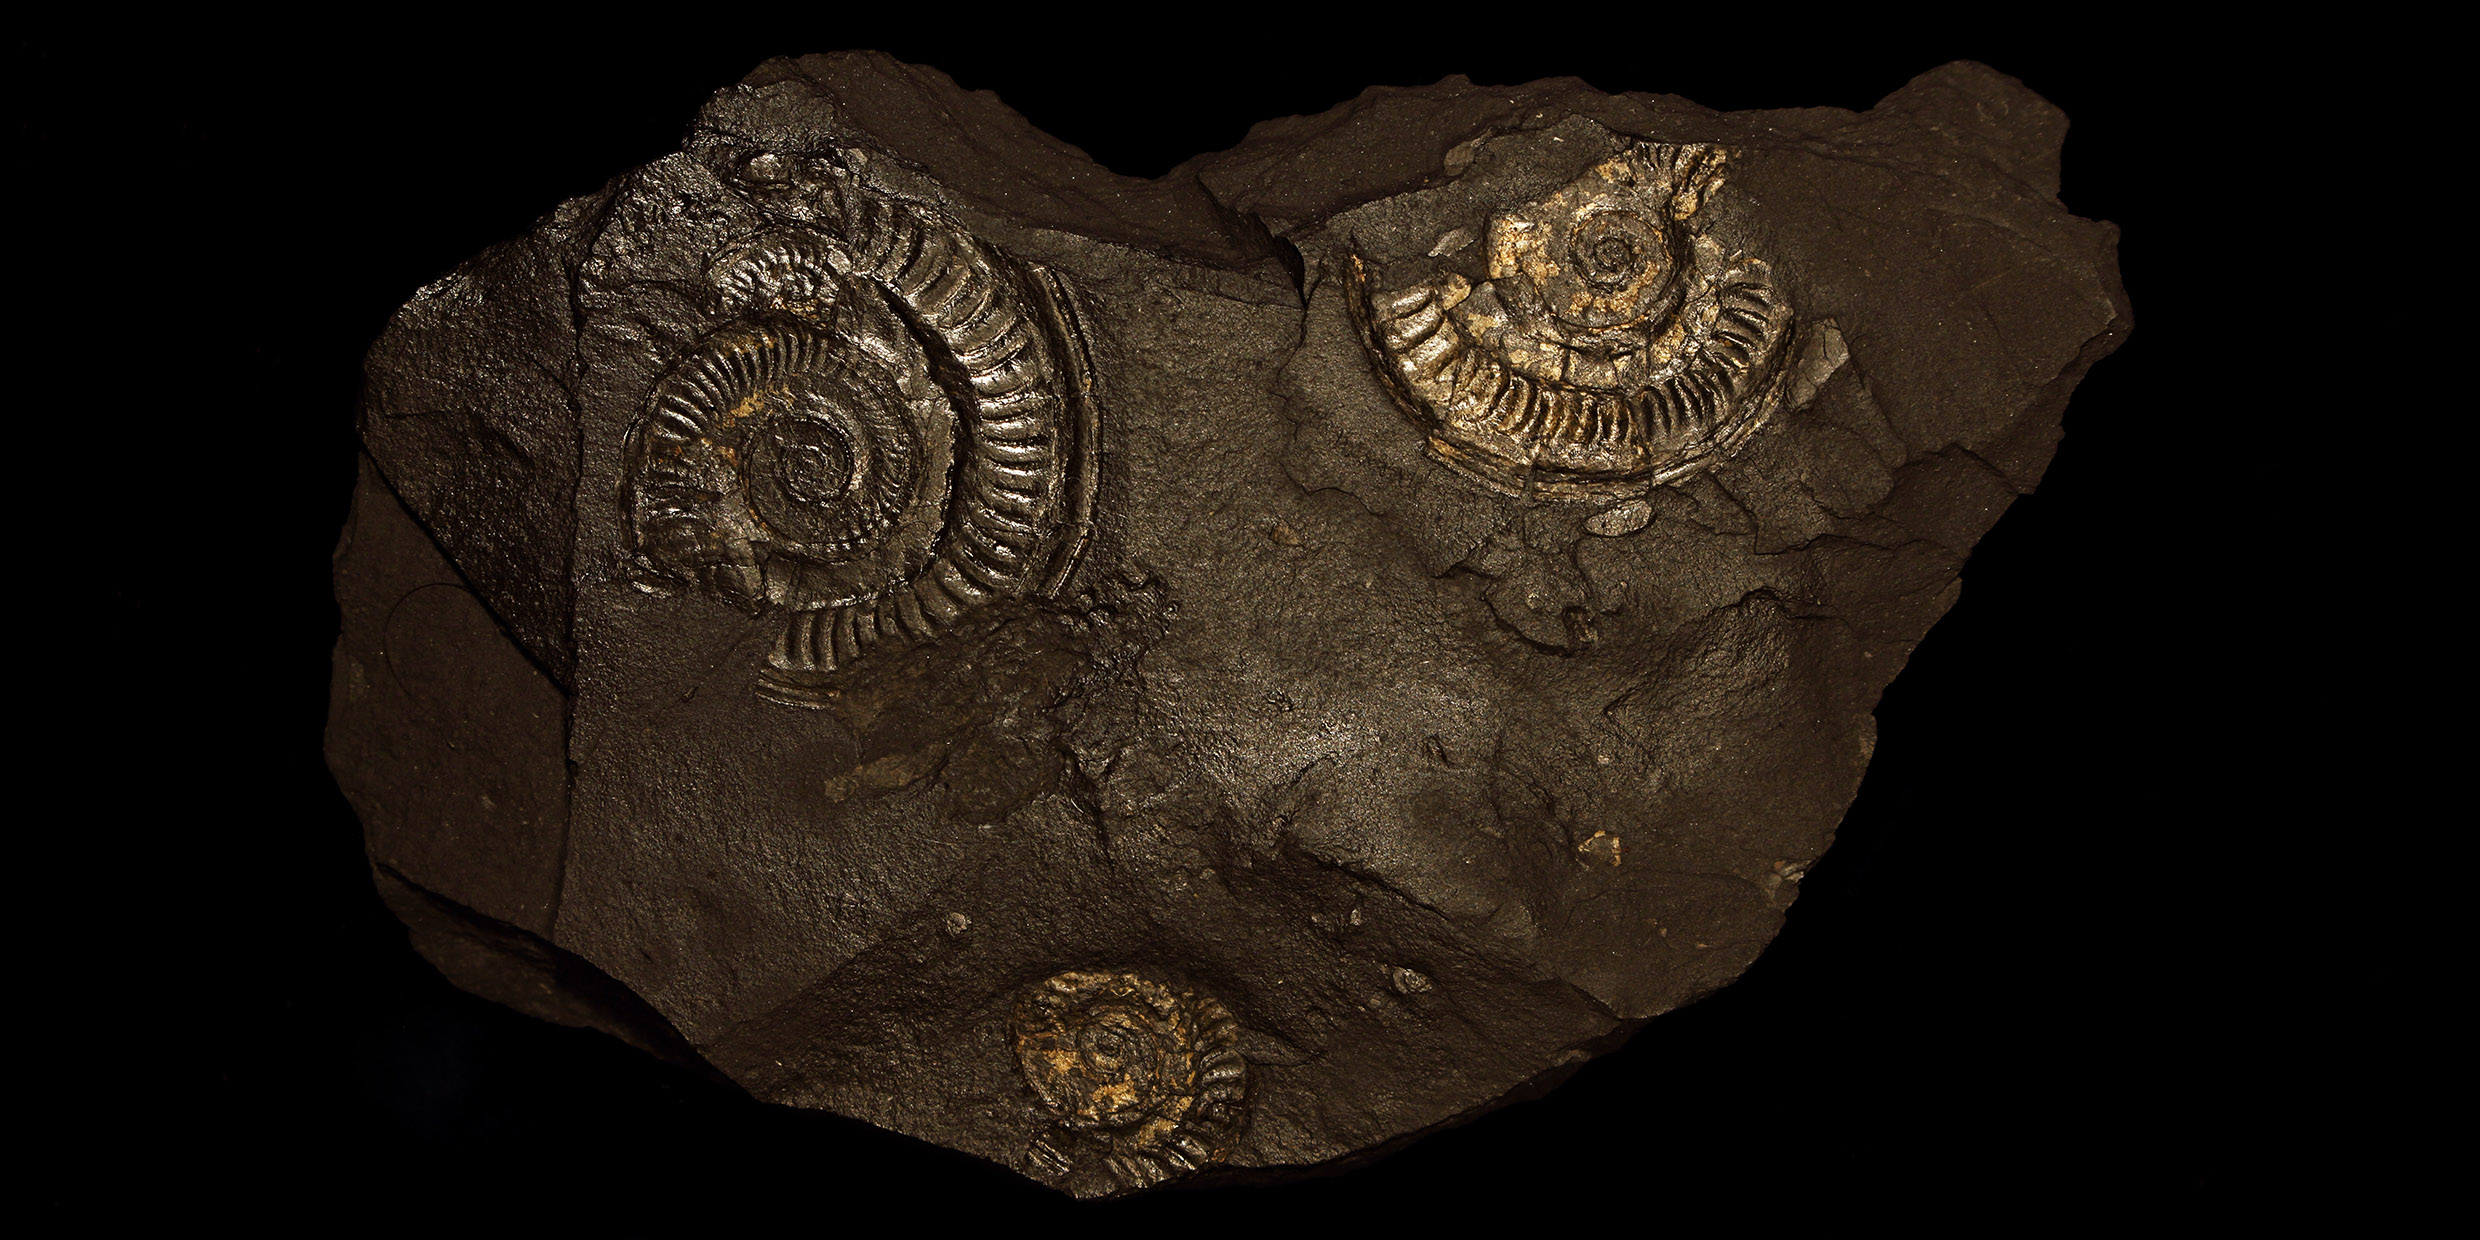 Image of fossilized ammonites encased in stone